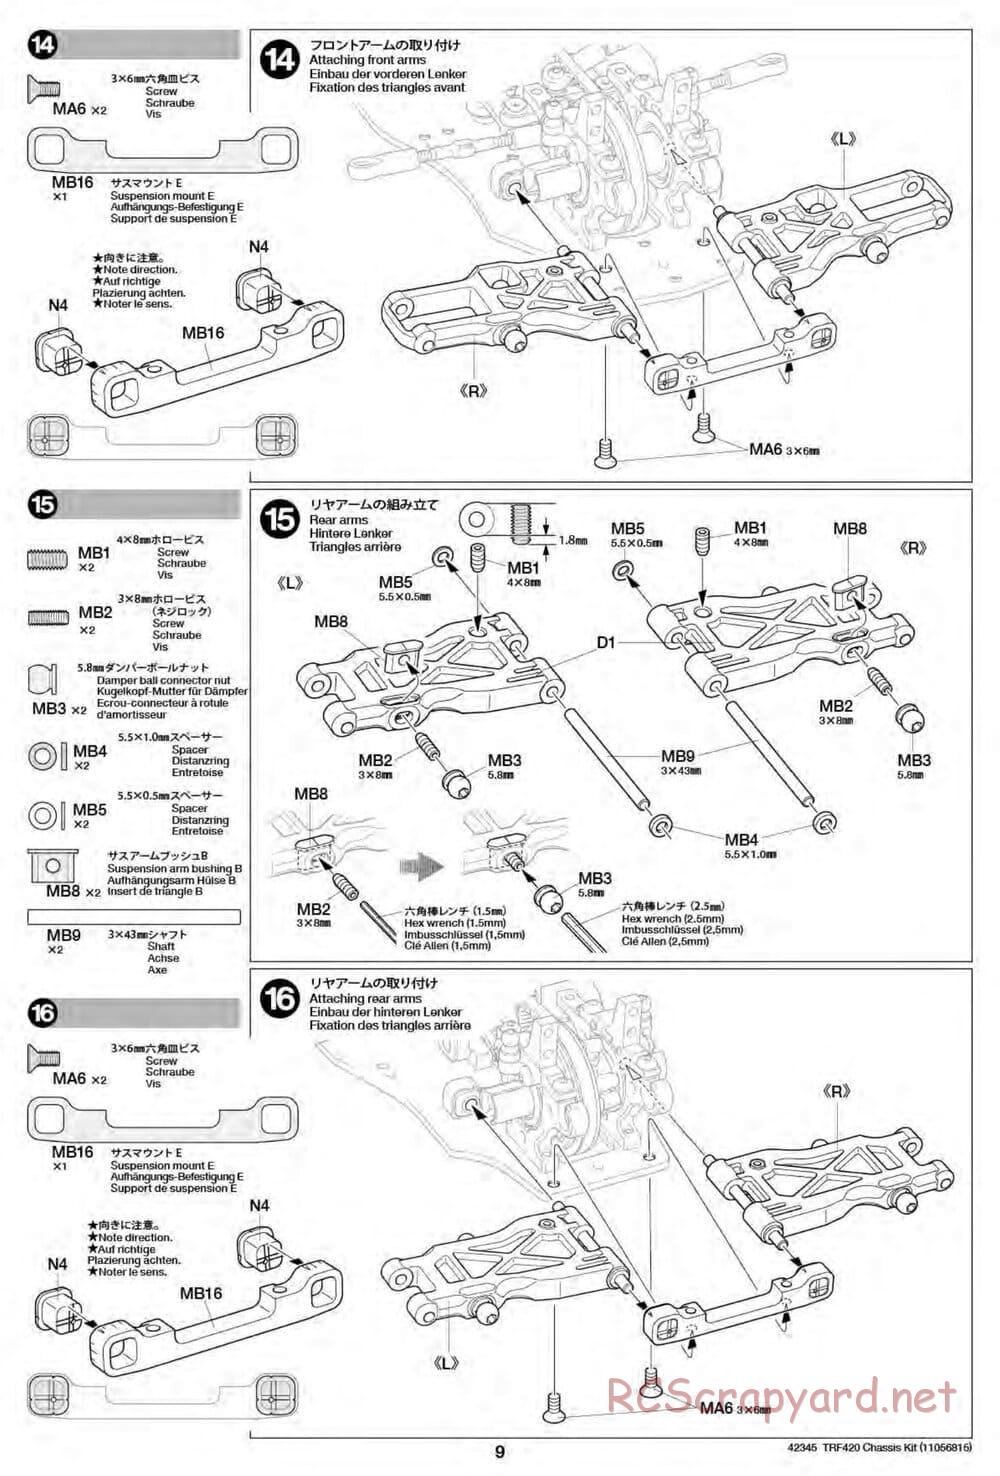 Tamiya - TRF420 Chassis - Manual - Page 9